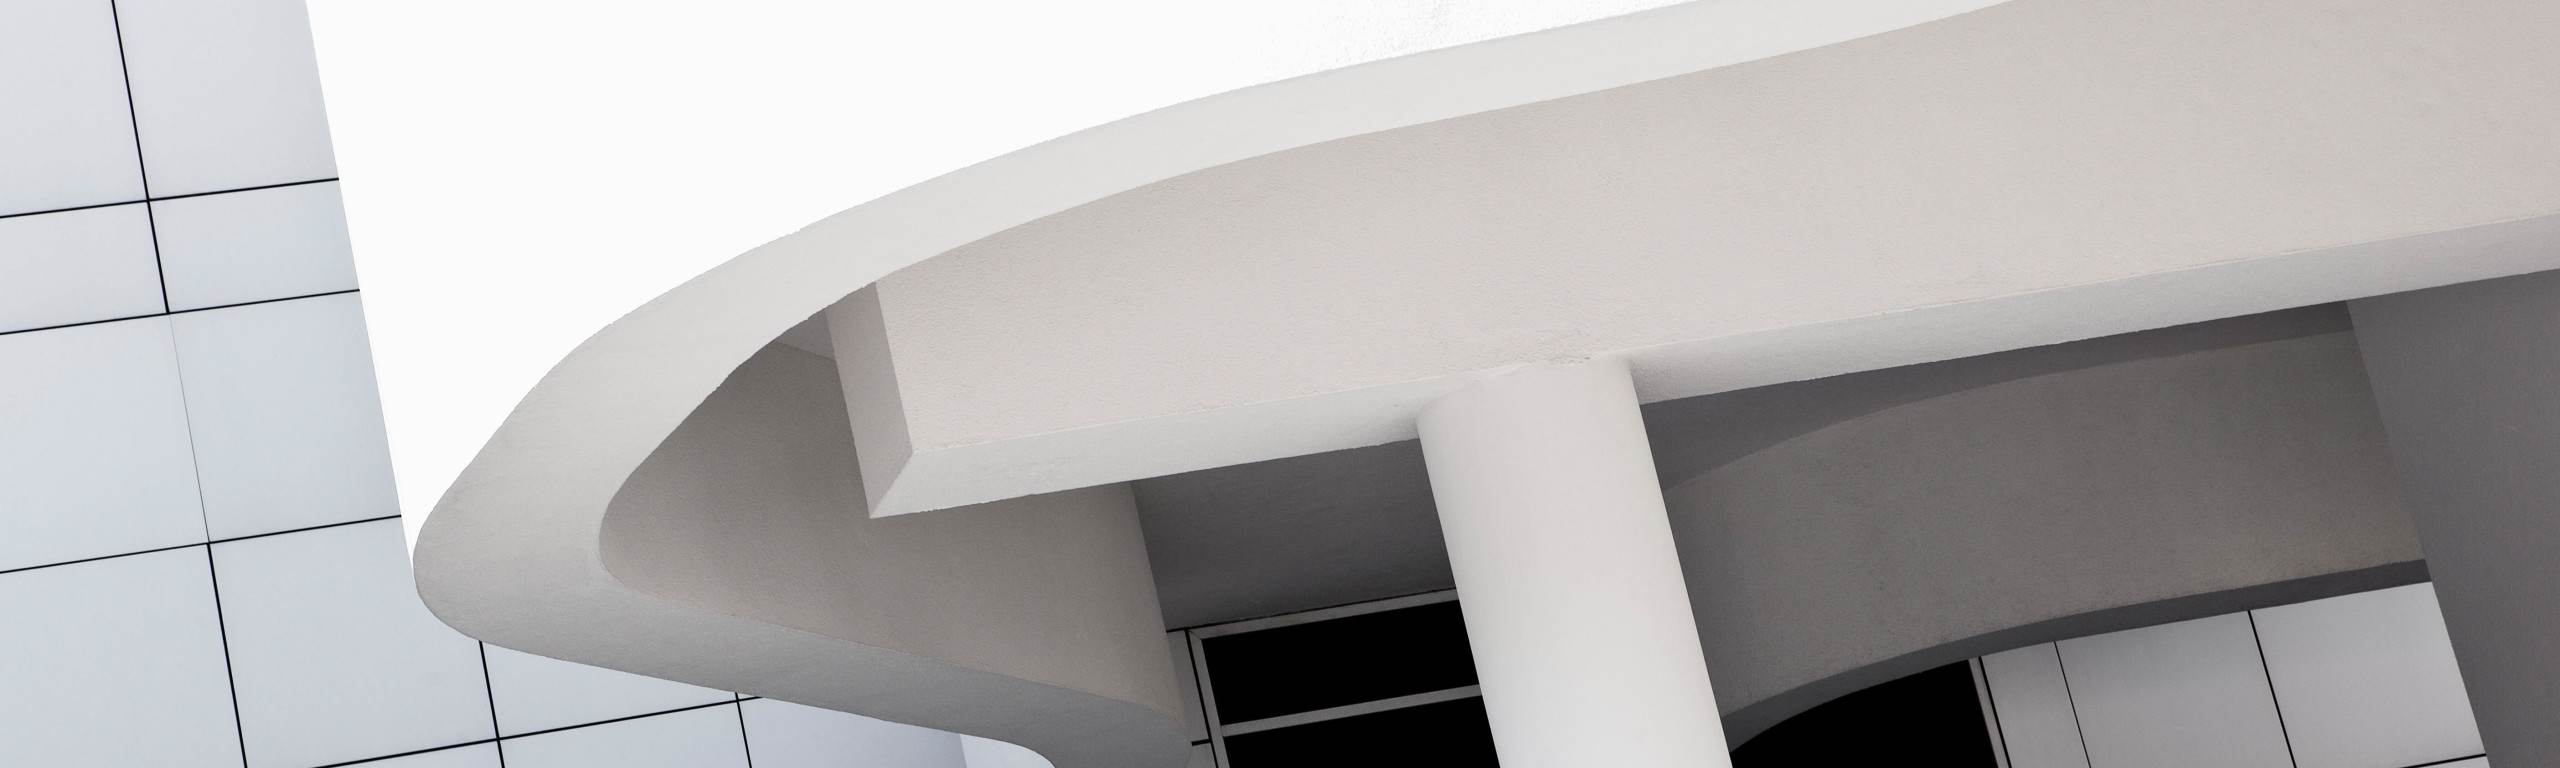 Richard Meier, Museu d’Art Contemporani de Barcelona